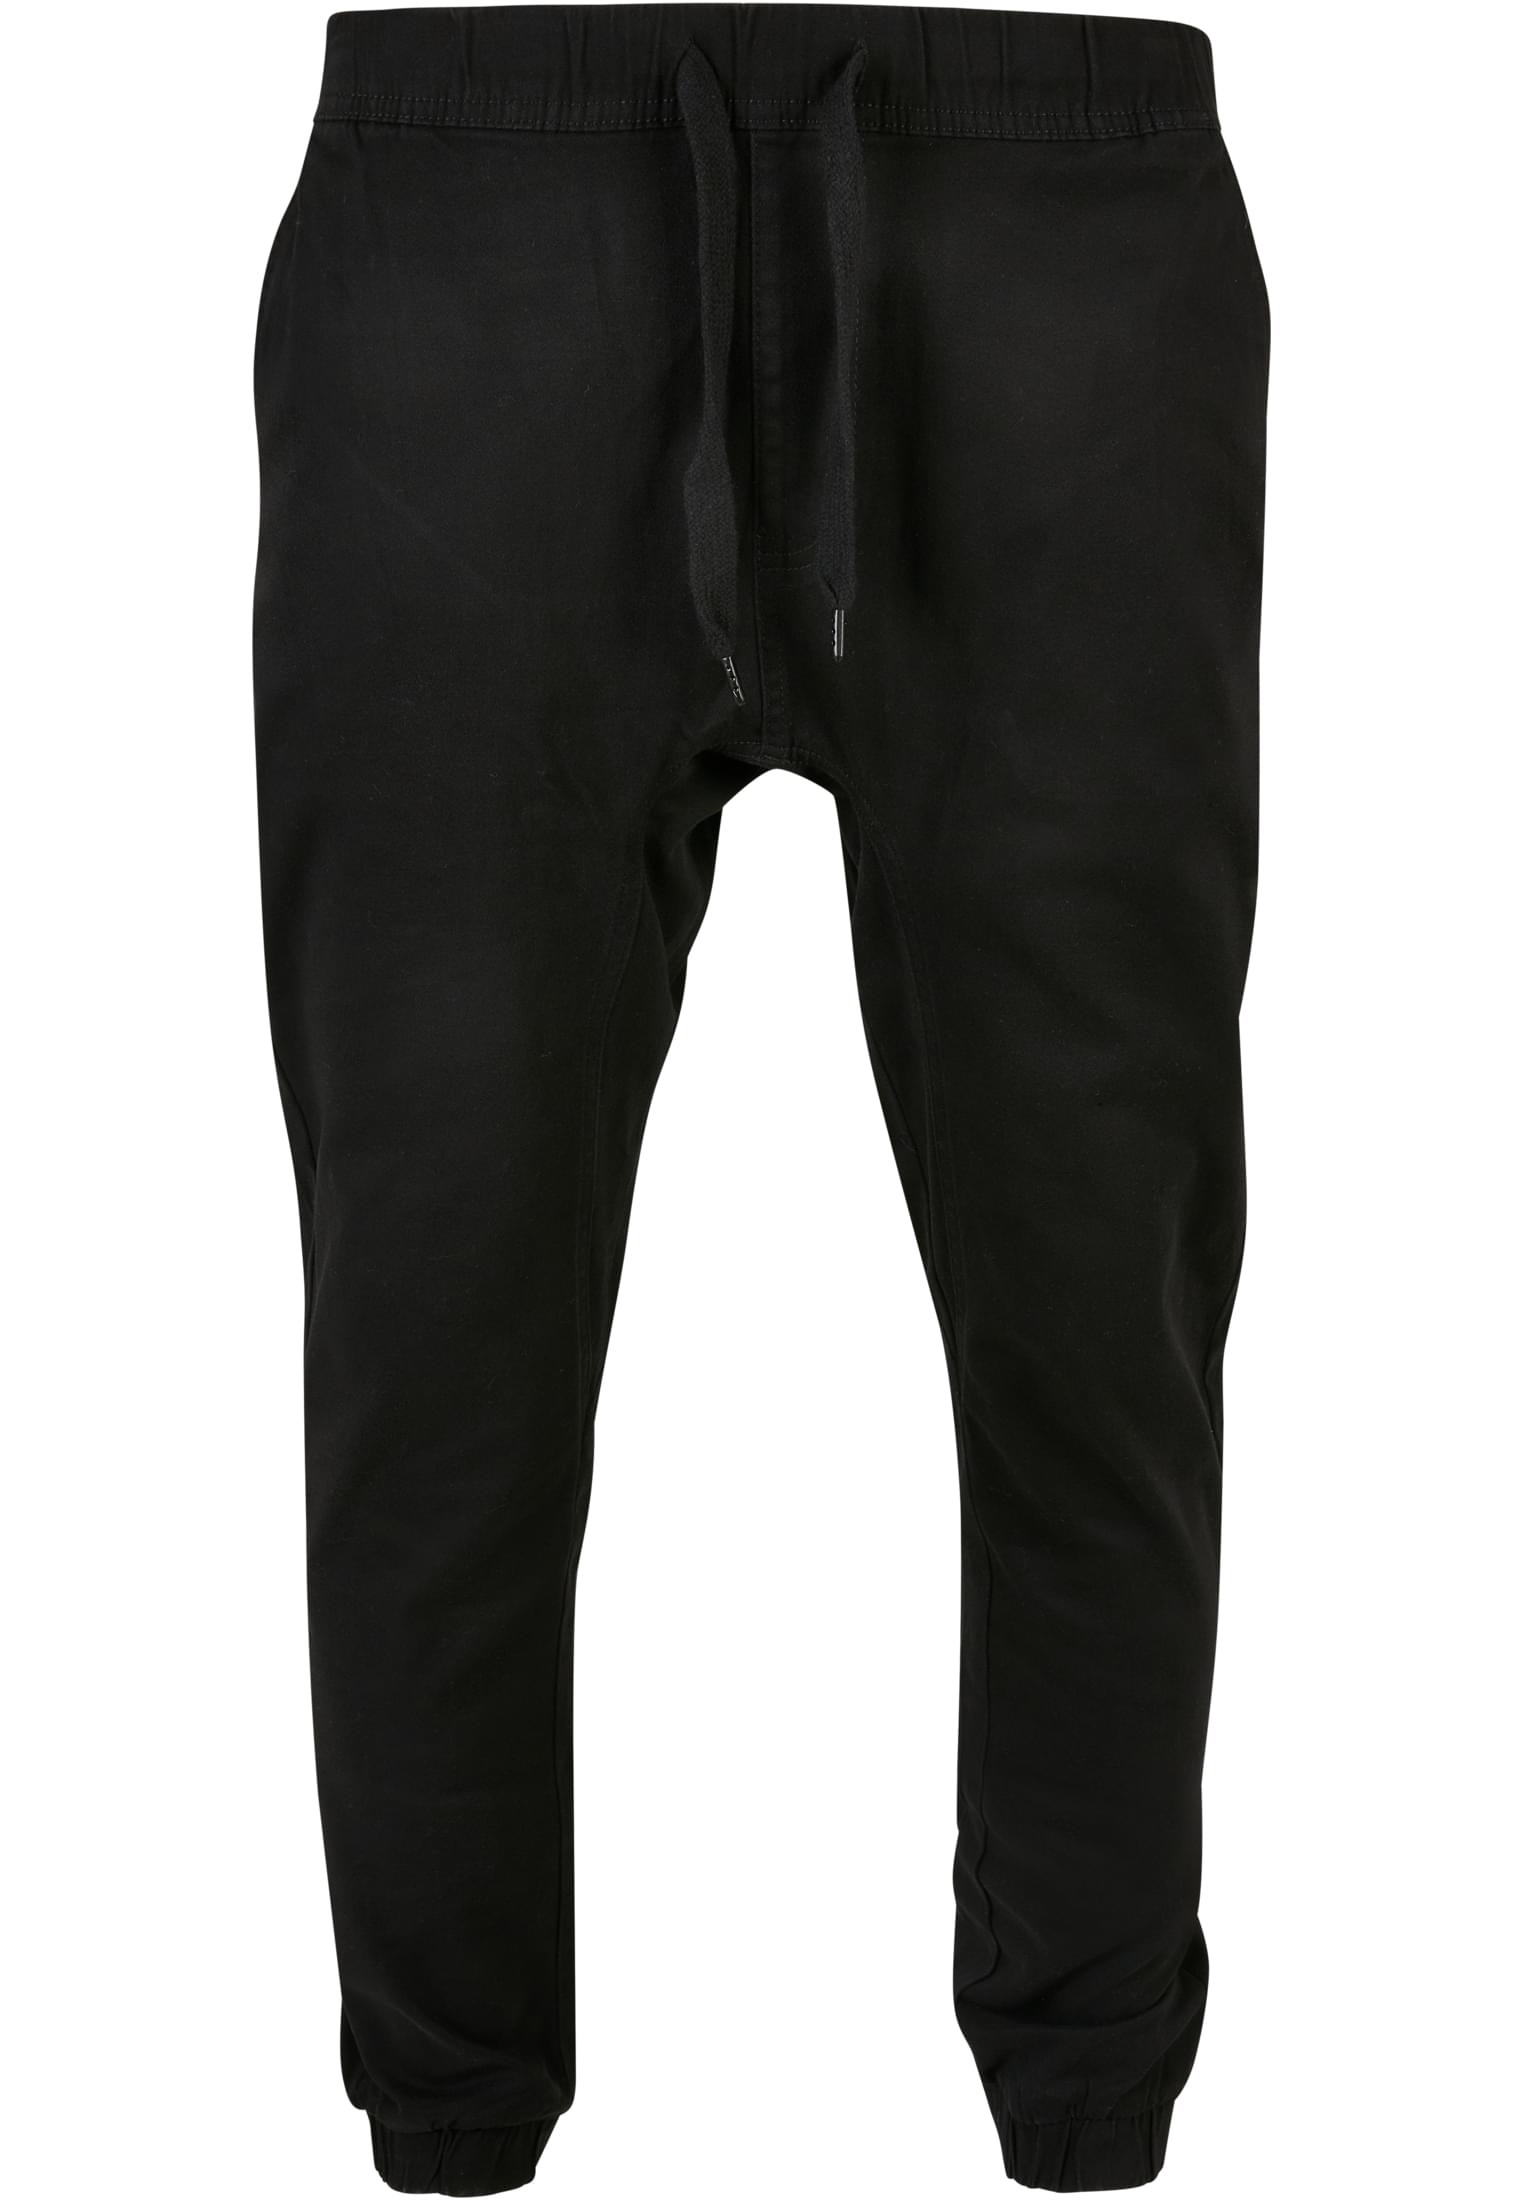 Stretch Jogger Pants Charcoal Black